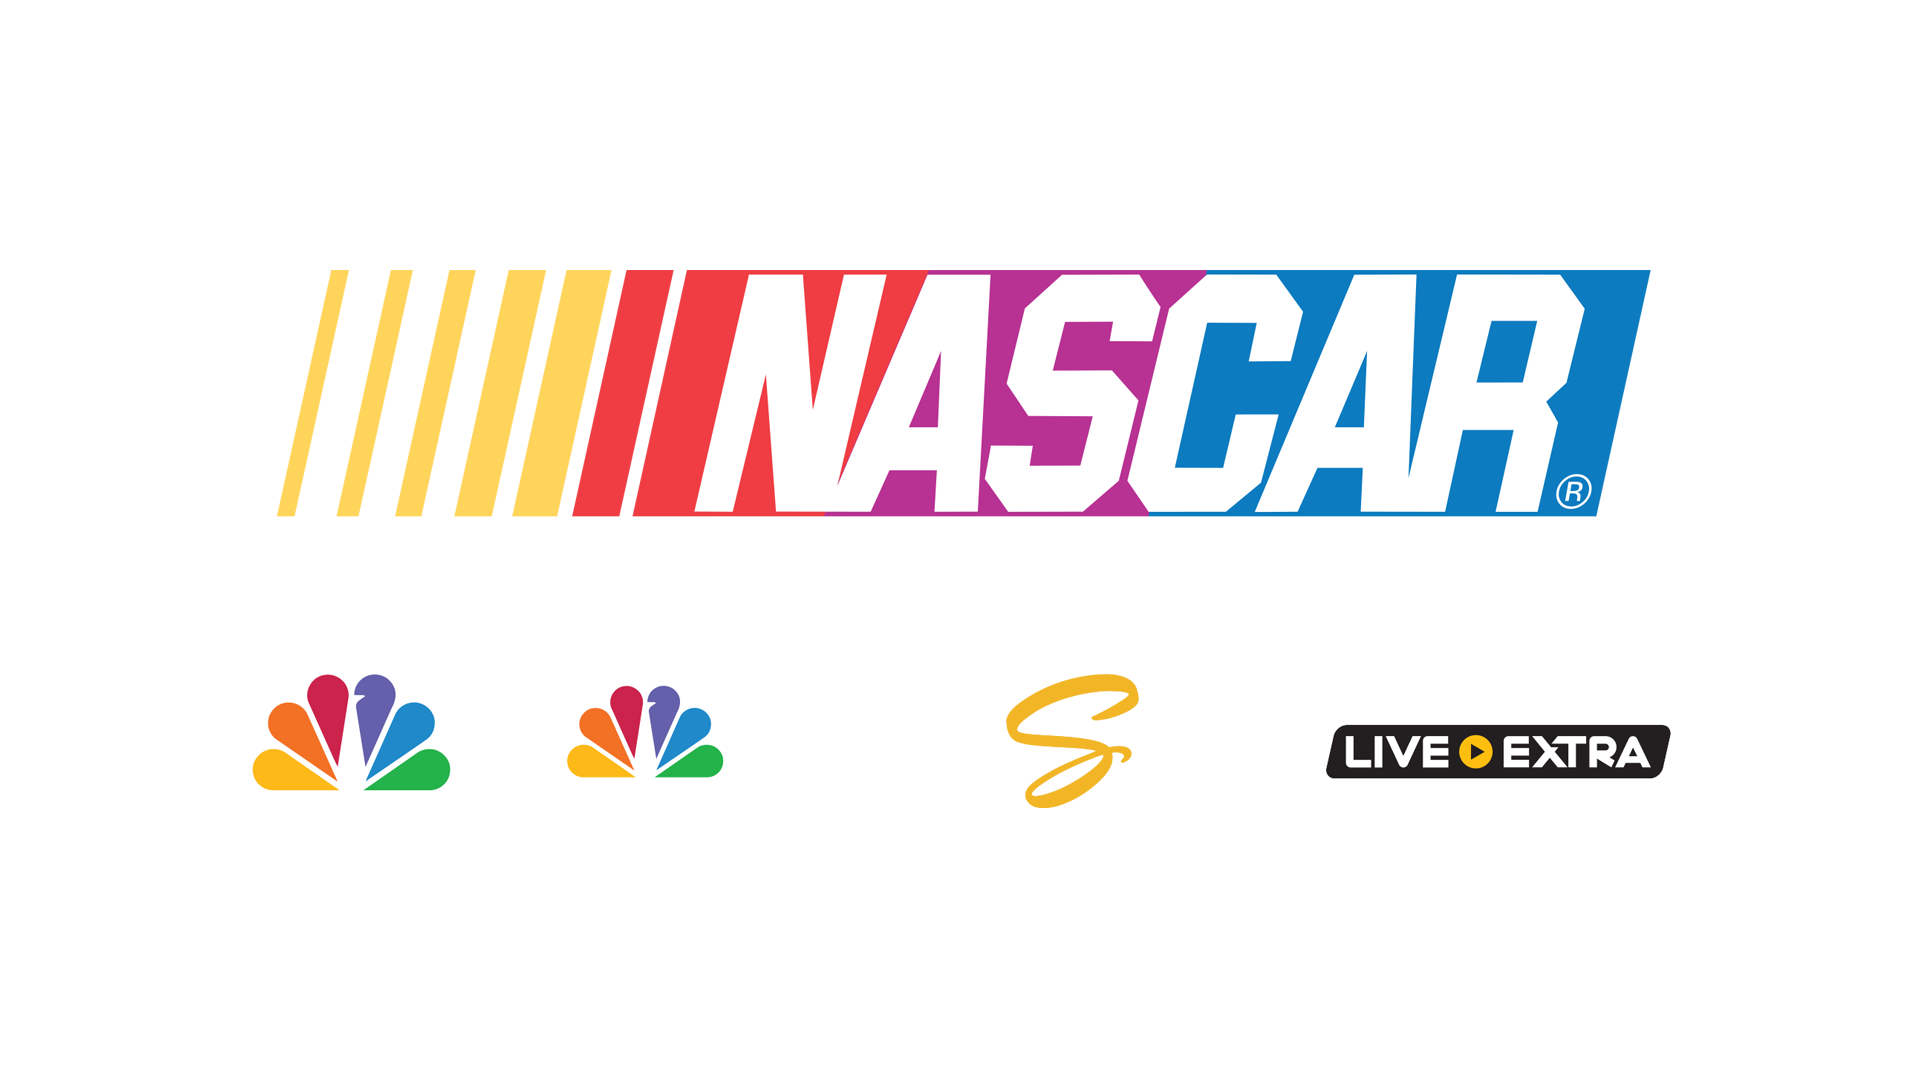 NBC SPORTS PRESENTS DUAL COVERAGE OF NASCAR SPRINT CUP CHAMPIONSHIP VIA NBCSN HOT PASS AT 3 P.M